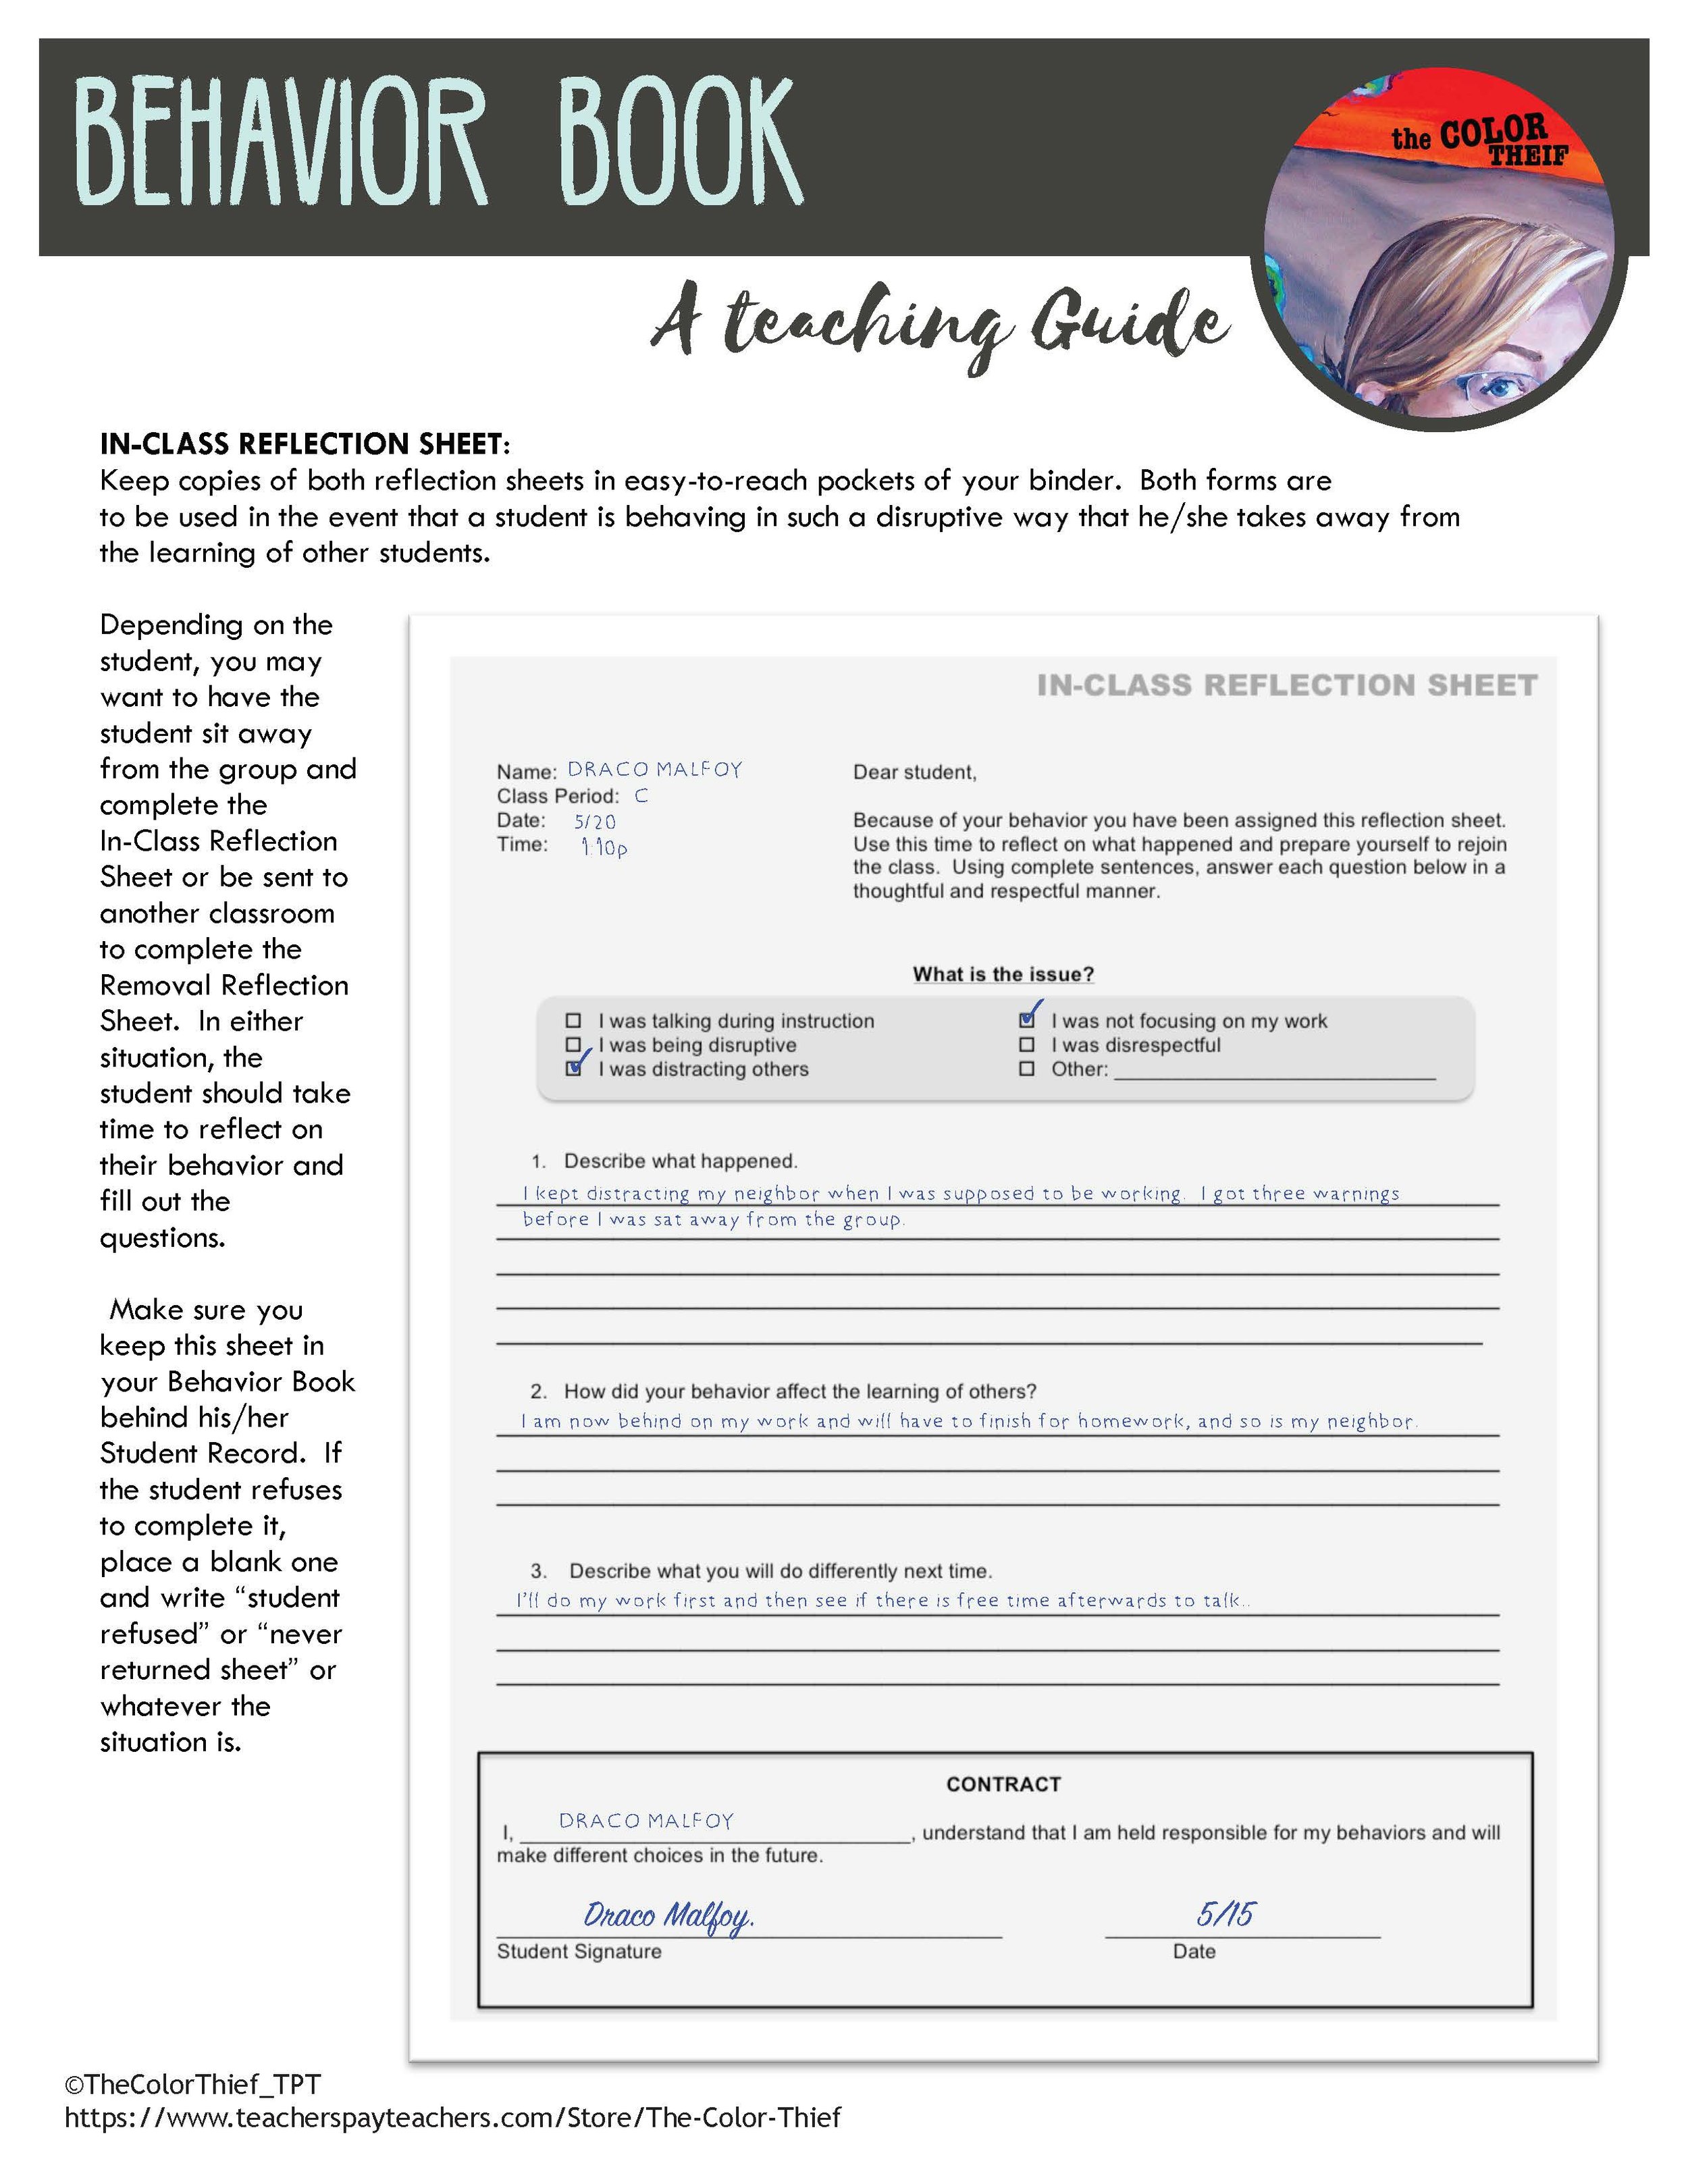 Behavior Book Teaching Guide 1_Page_6.jpg